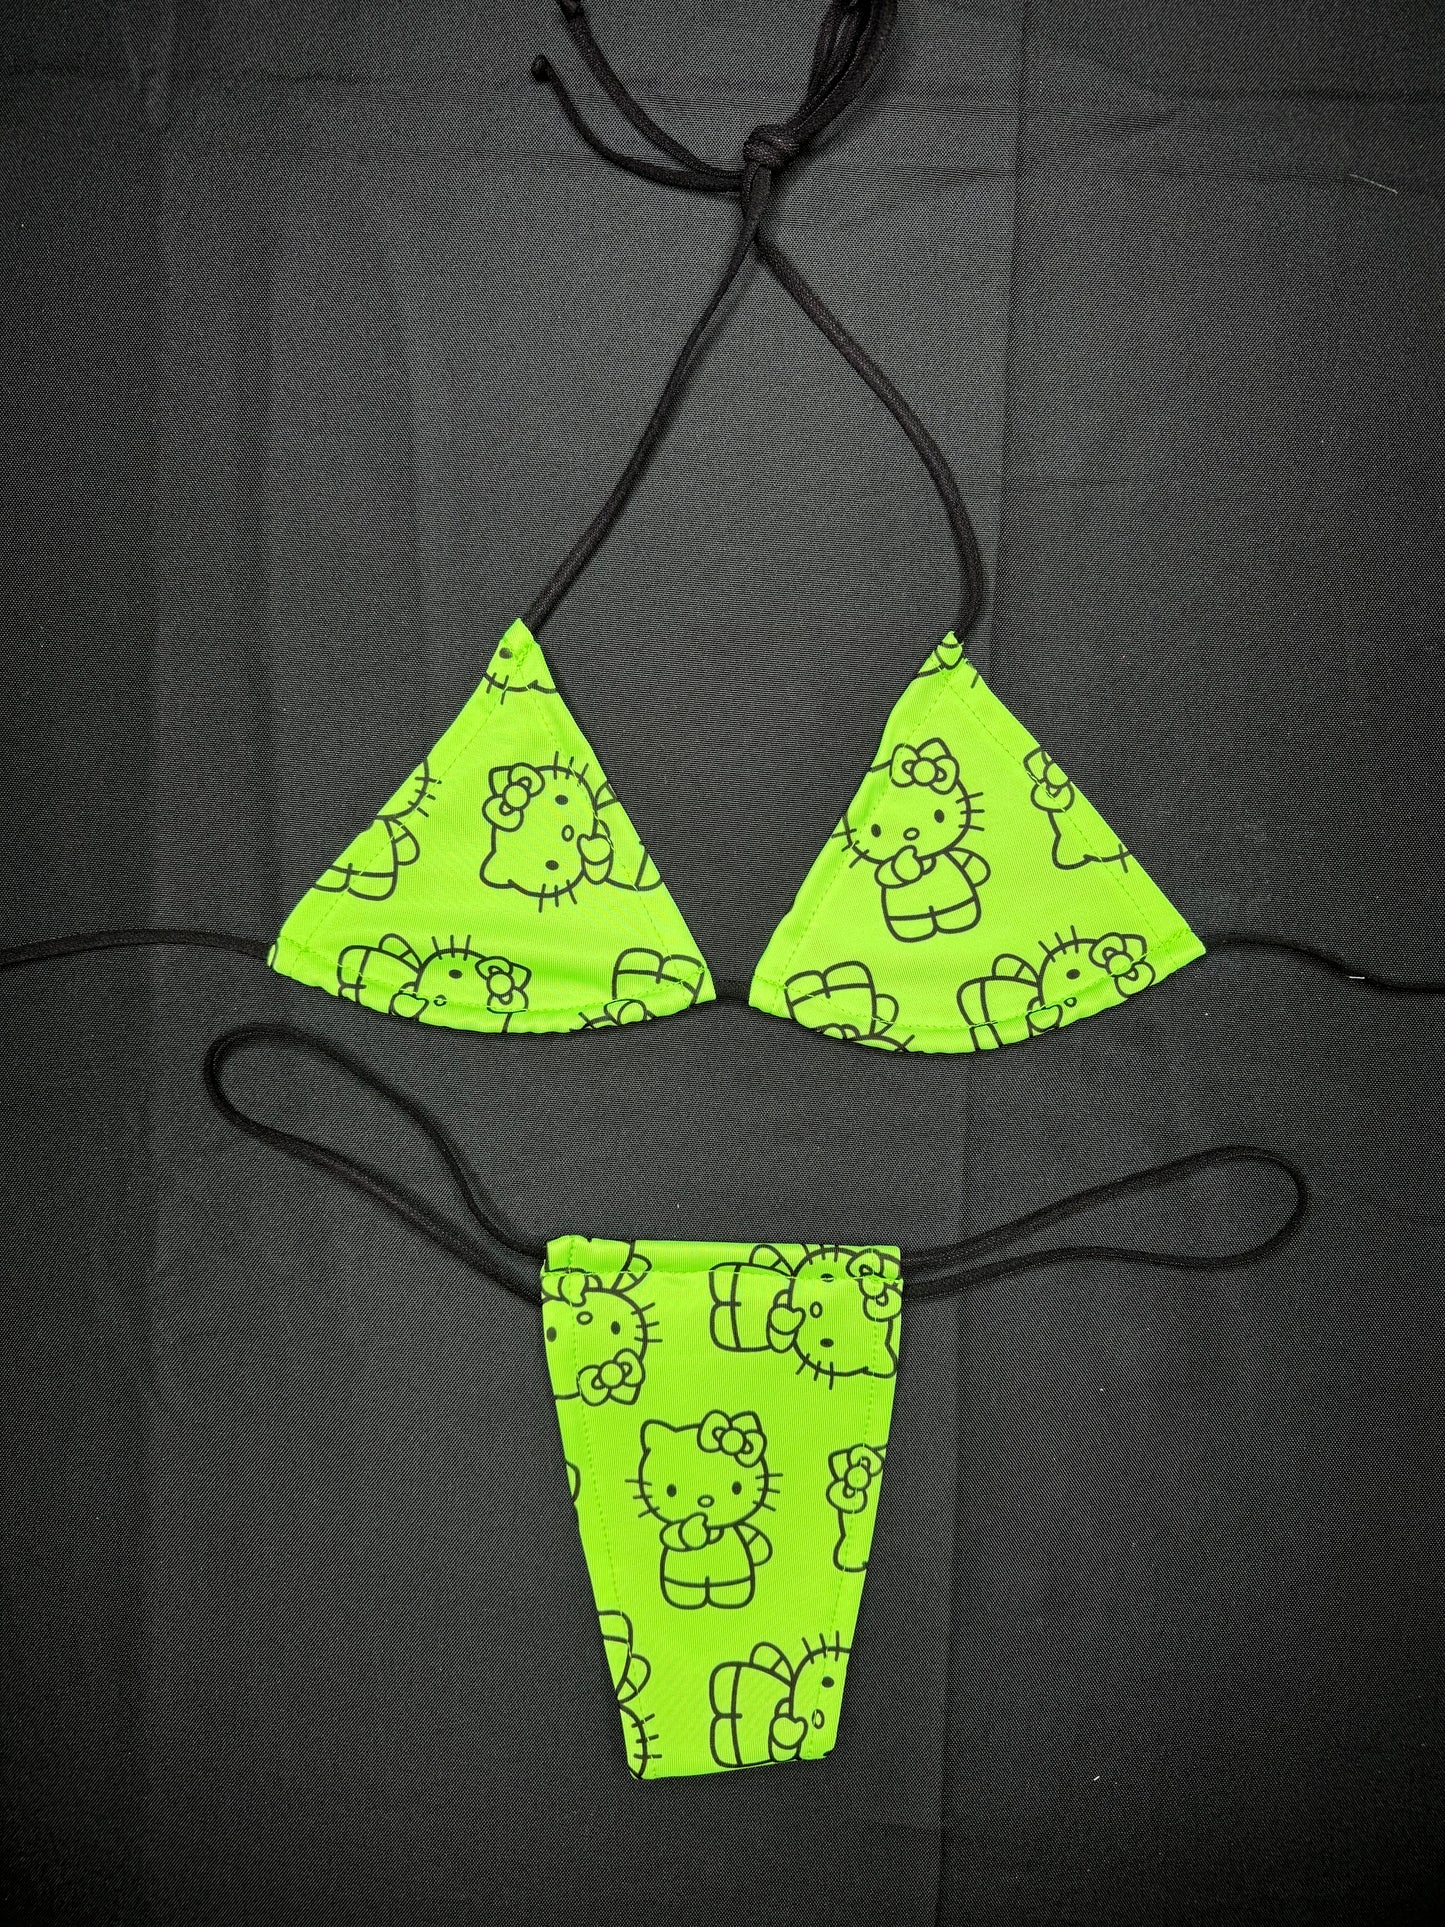 Neon Green Kitty Micro Bikini Lingerie Outfit